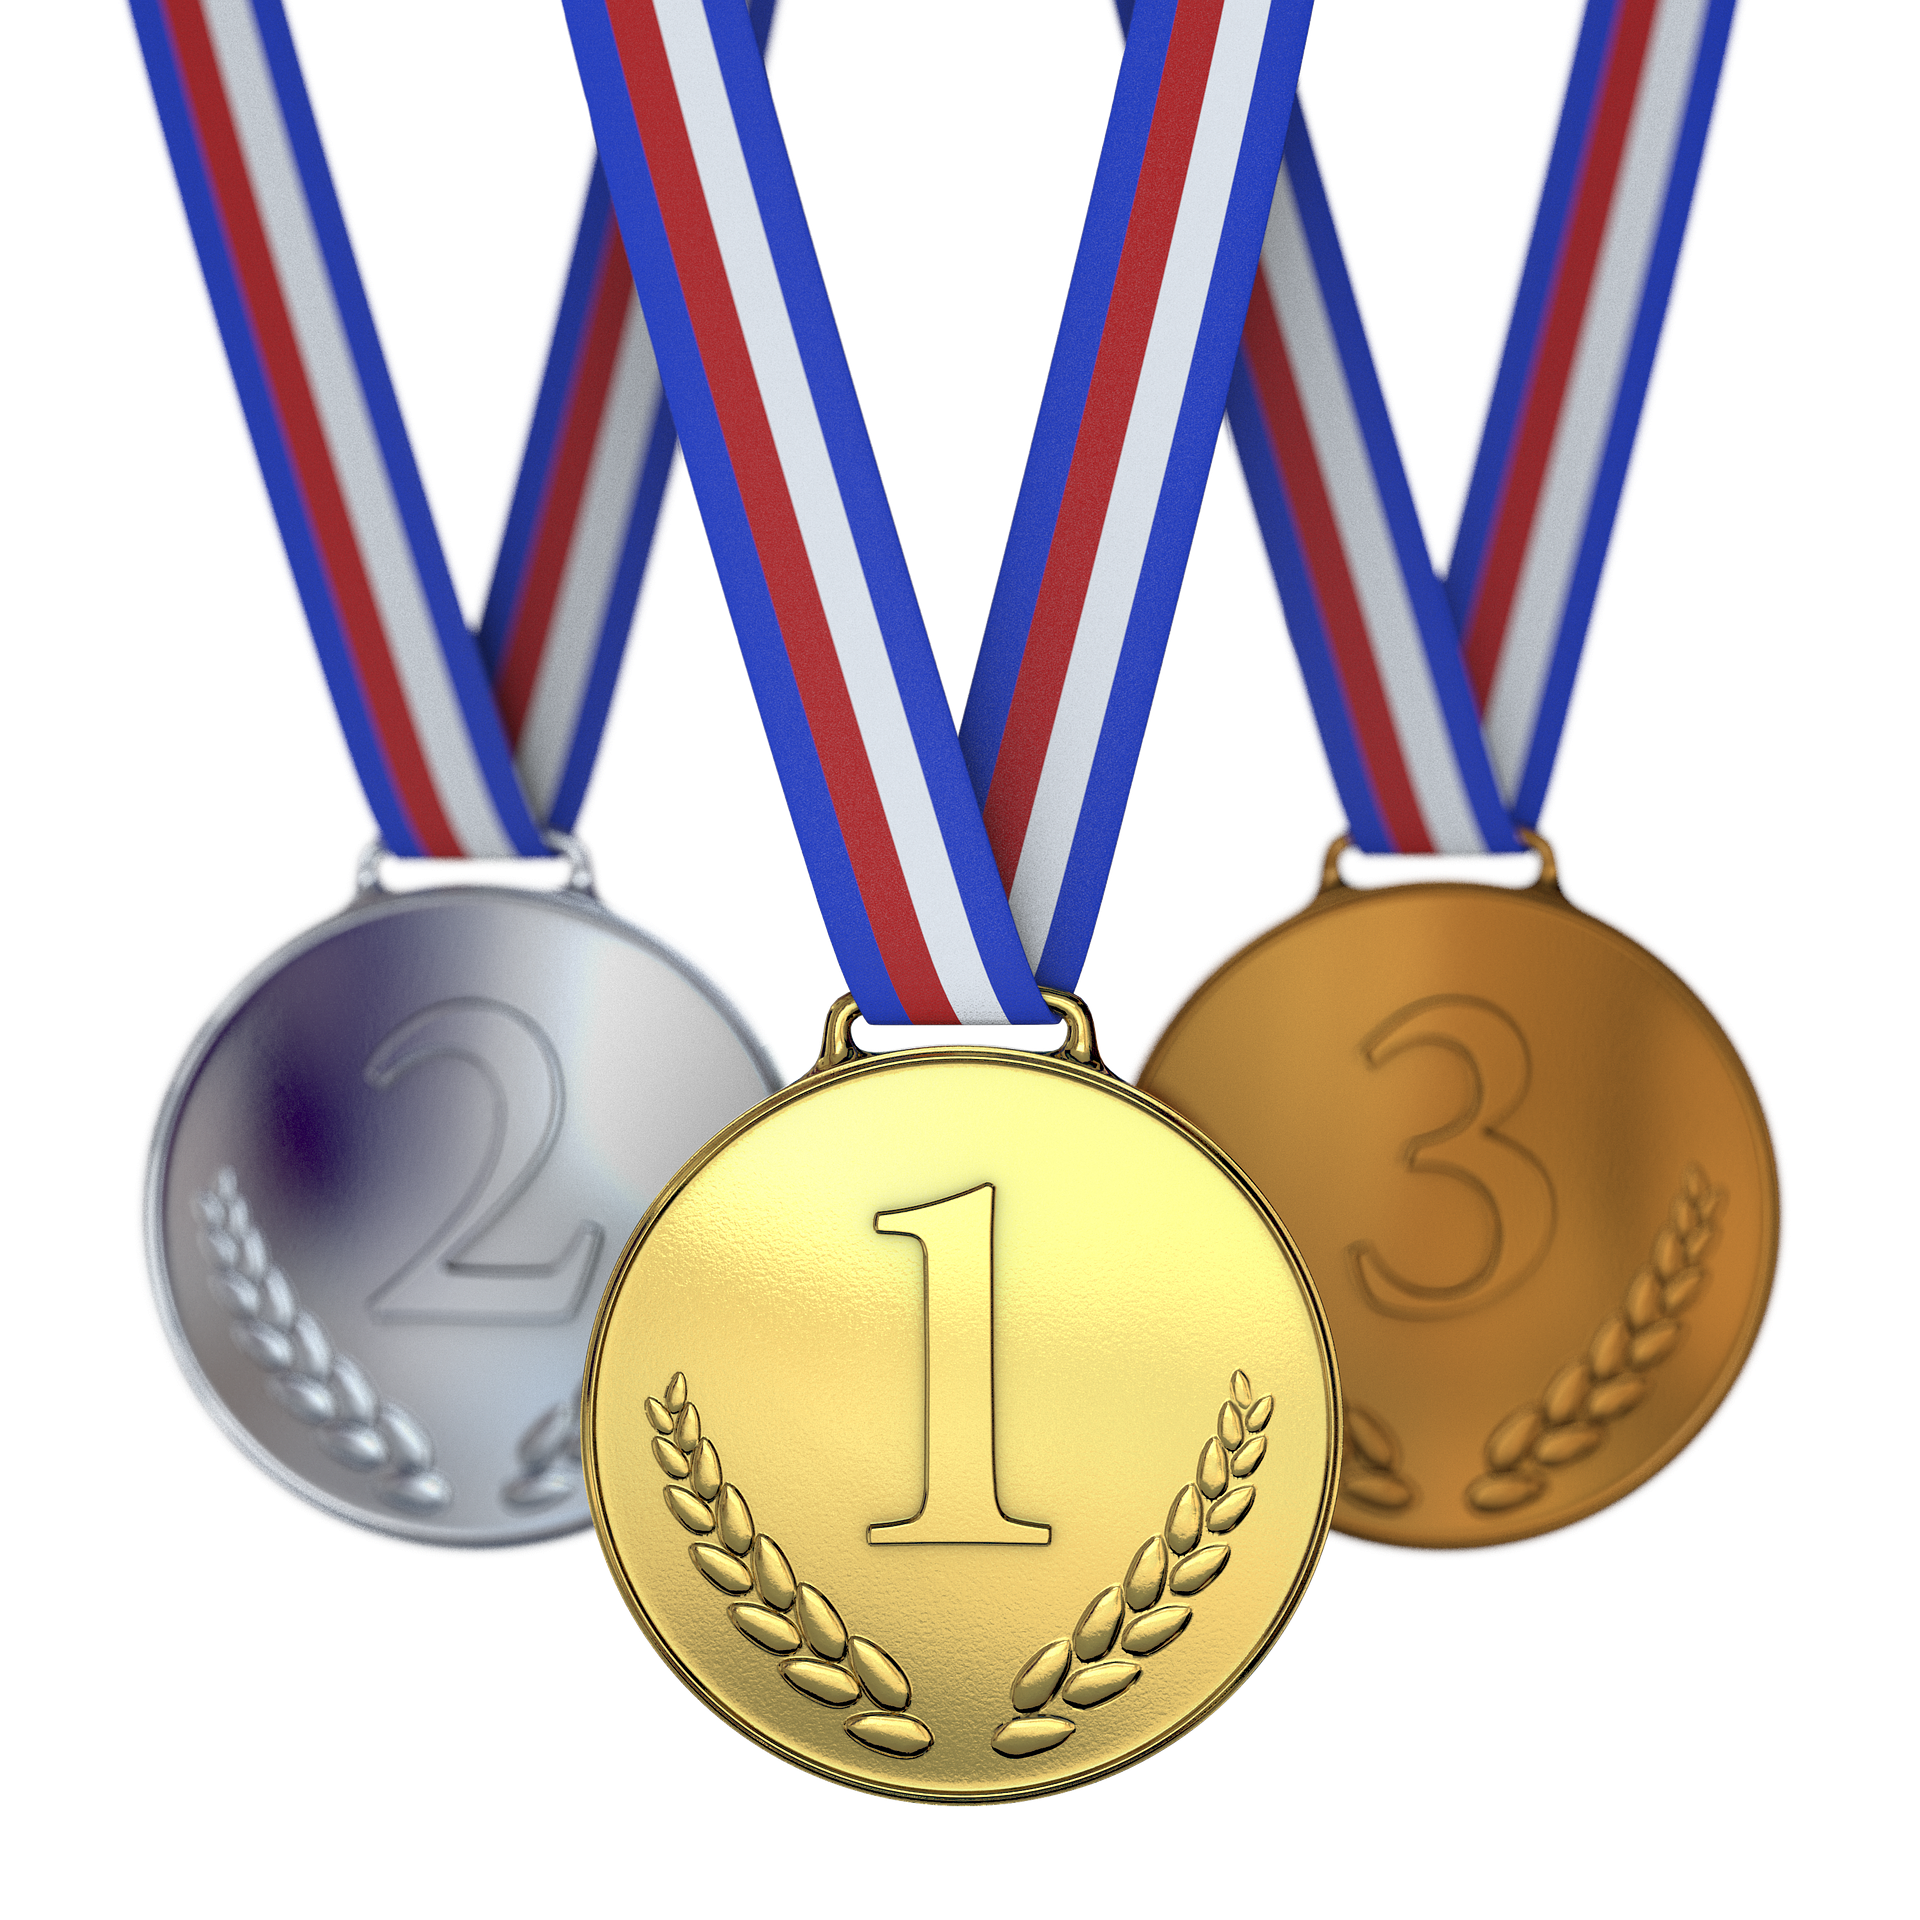 medals-1622902_1920.png